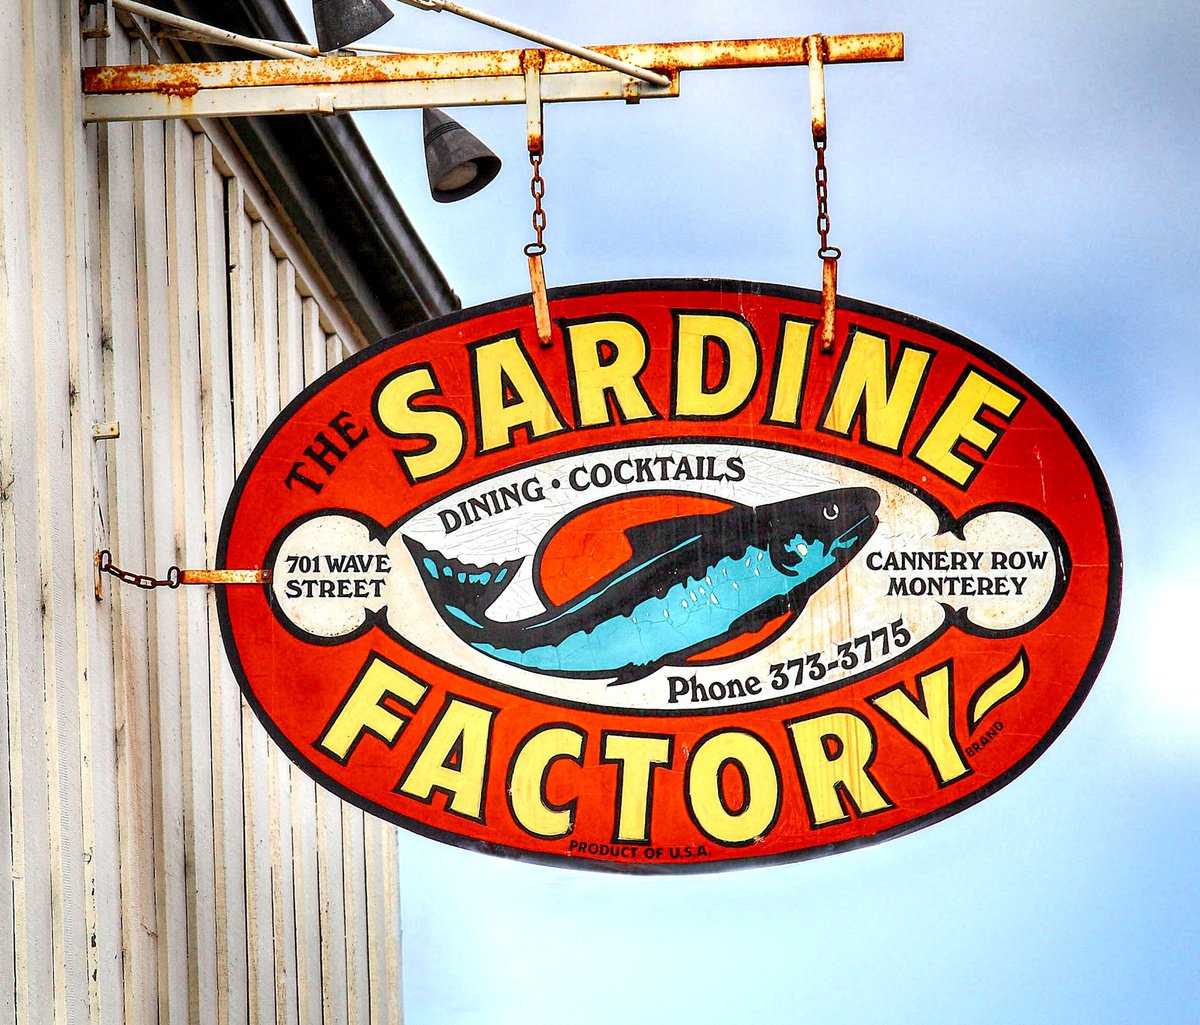 Sardine Factory by Paul Berriff OBE